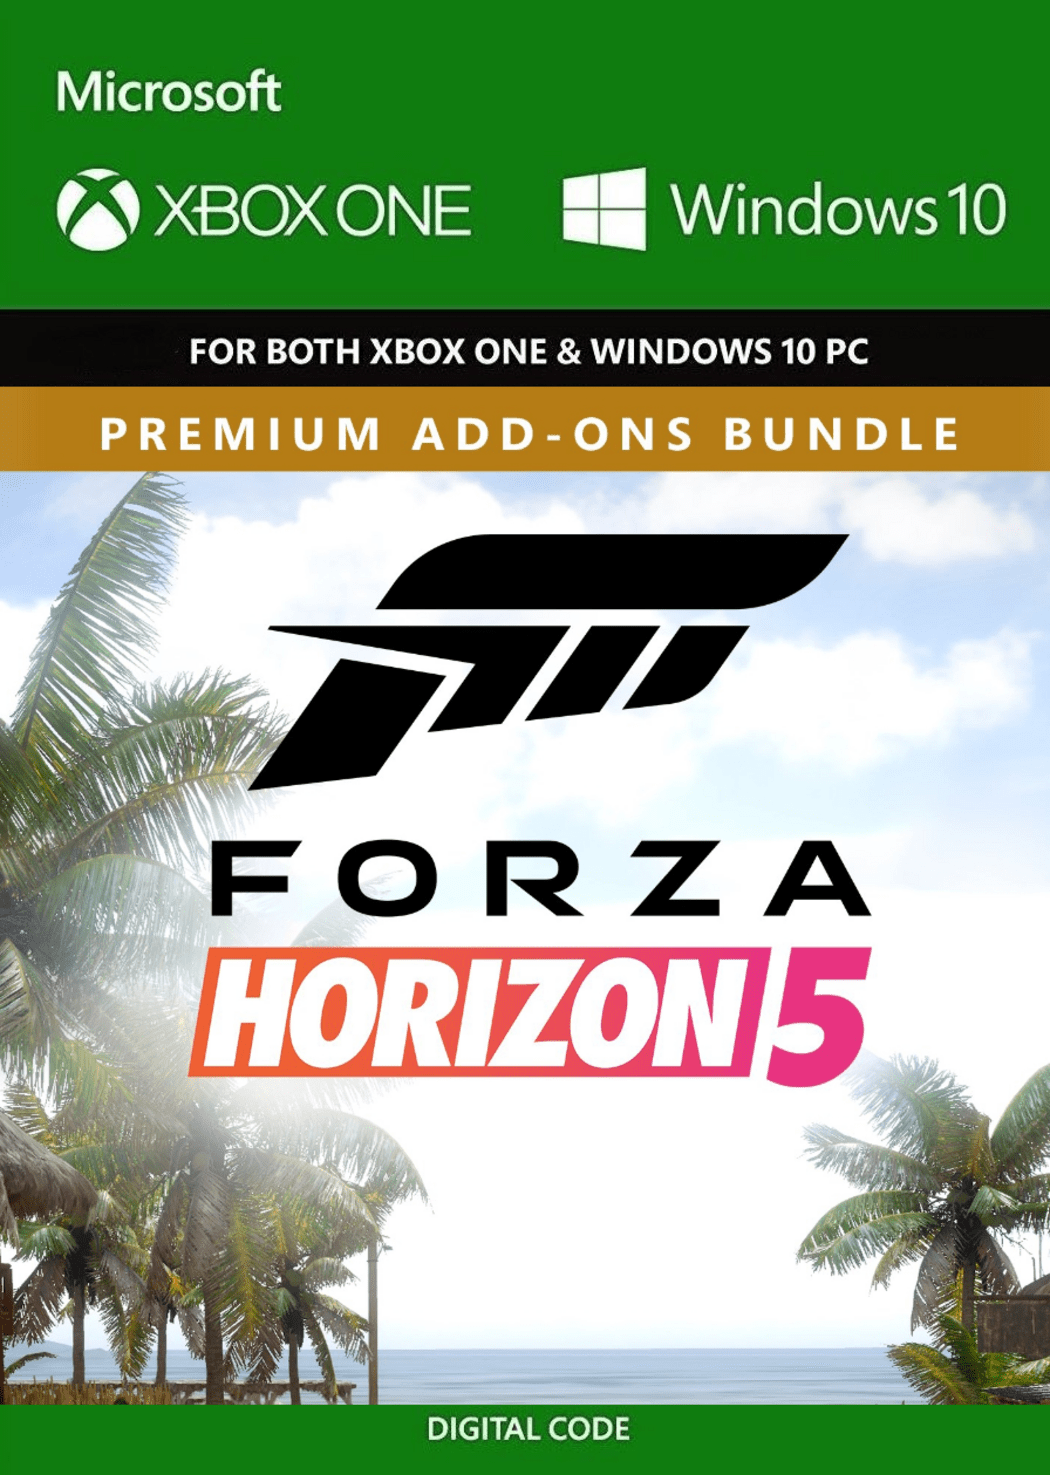 Download XboxDownload Microsft Forza Horizon 5 VIP Membership Xbox One  Digital Code